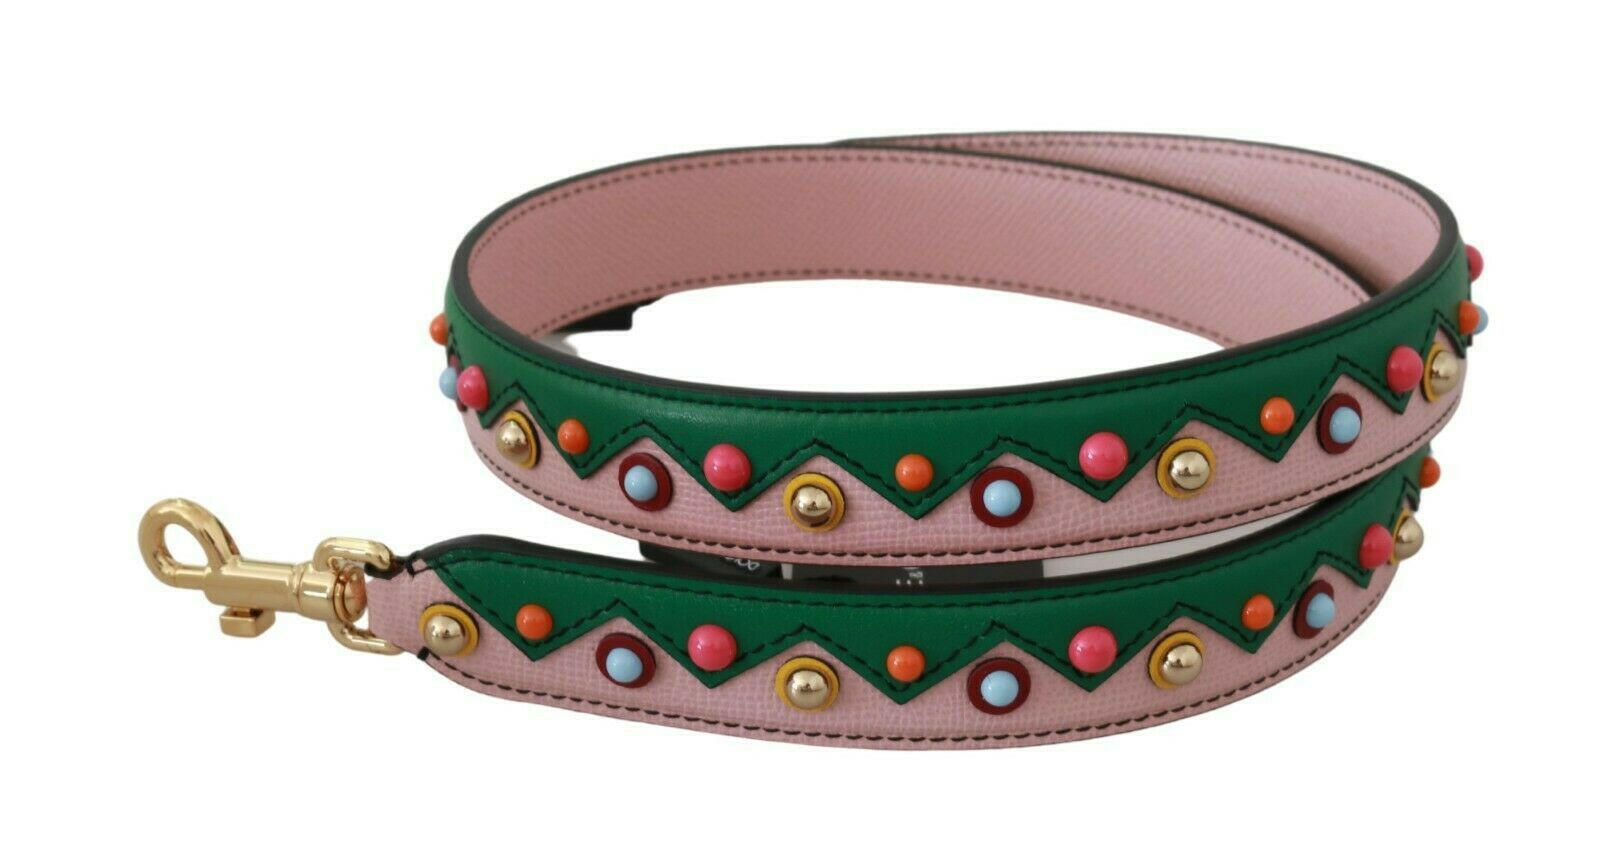 Dolce & Gabbana Shoulder Strap Leather Pink Handbag Accessory - GENUINE AUTHENTIC BRAND LLC  